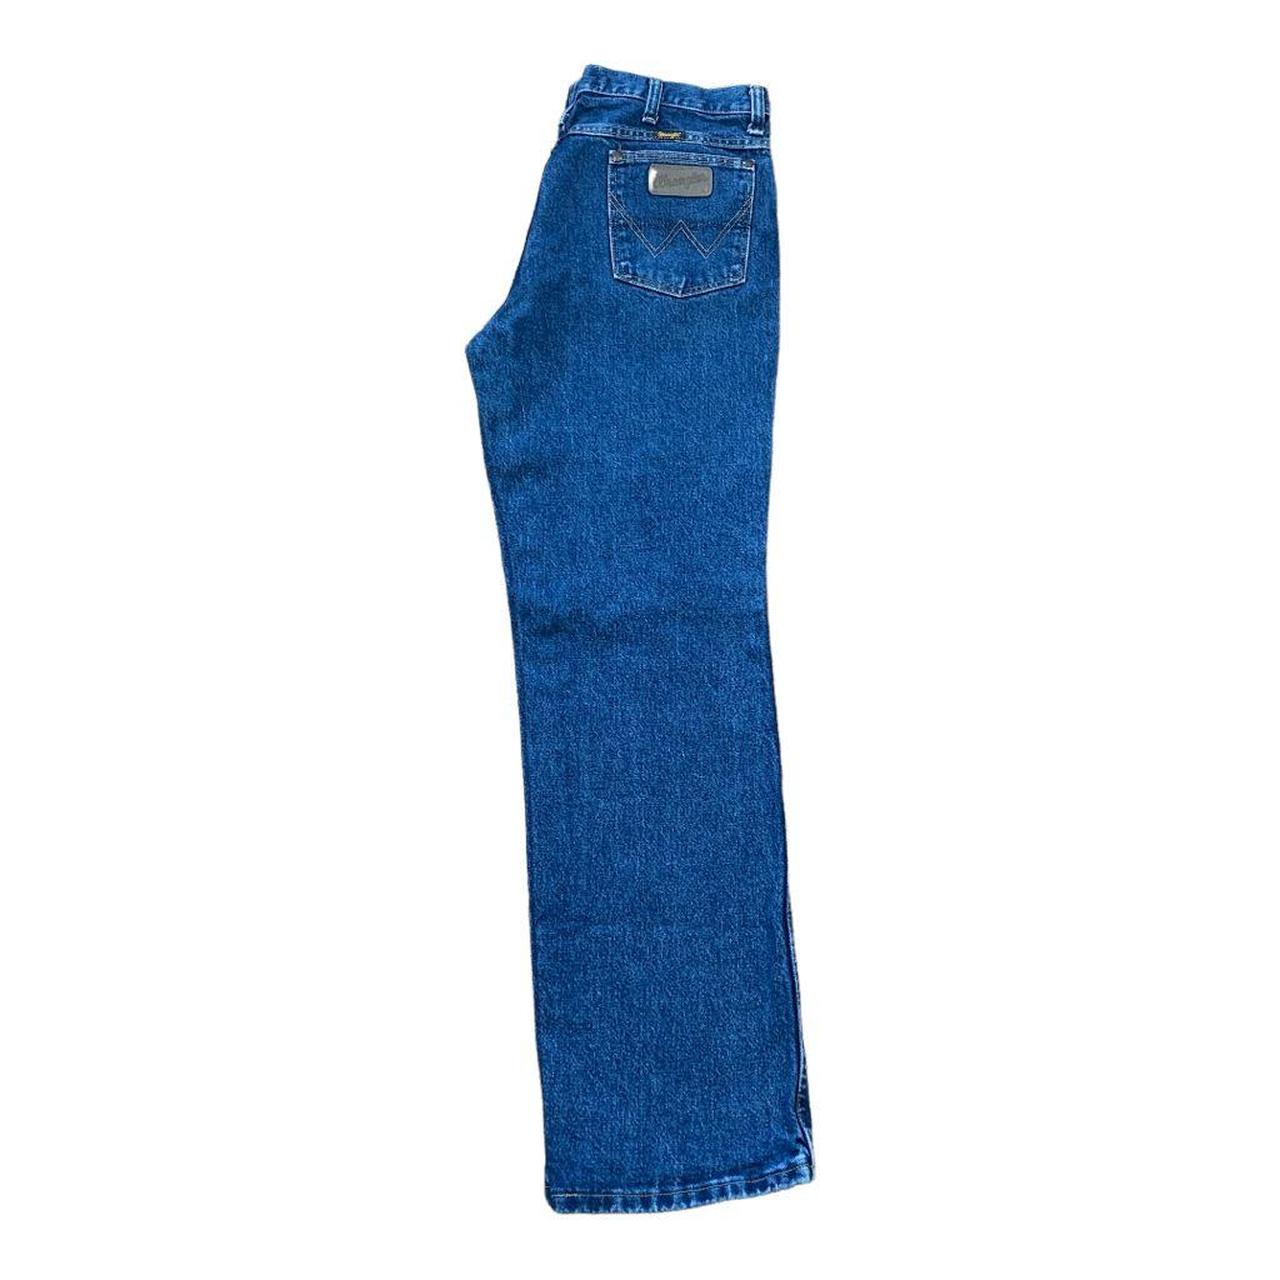 Product Image 3 - 90s Wrangler Jeans Vintage Size